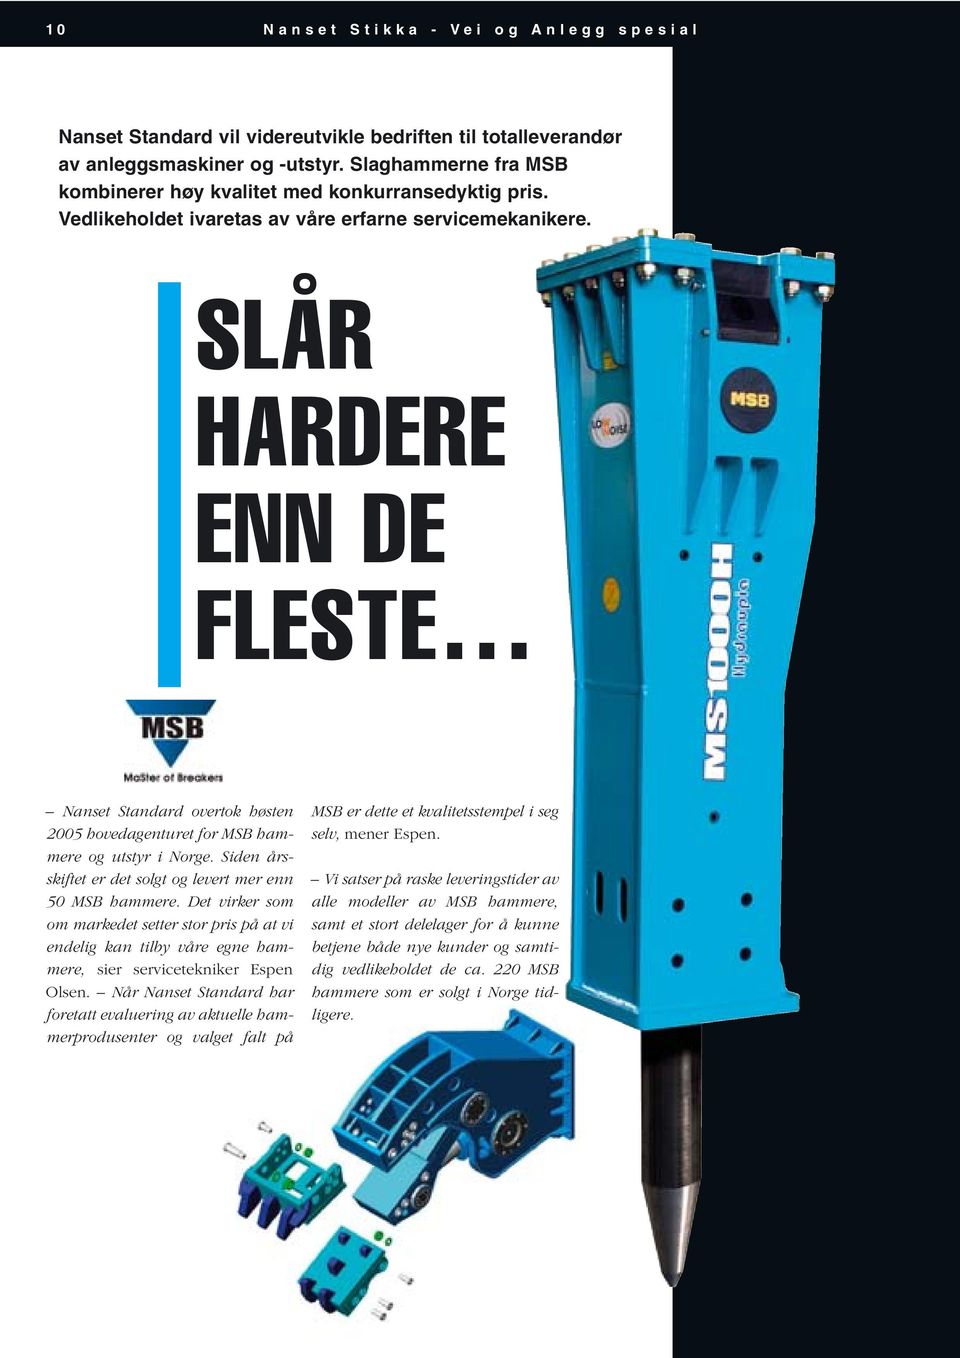 SLÅR HARDERE ENN DE FLESTE Nanset Standard overtok høsten 2005 hovedagenturet for MSB hammere og utstyr i Norge. Siden årsskiftet er det solgt og levert mer enn 50 MSB hammere.